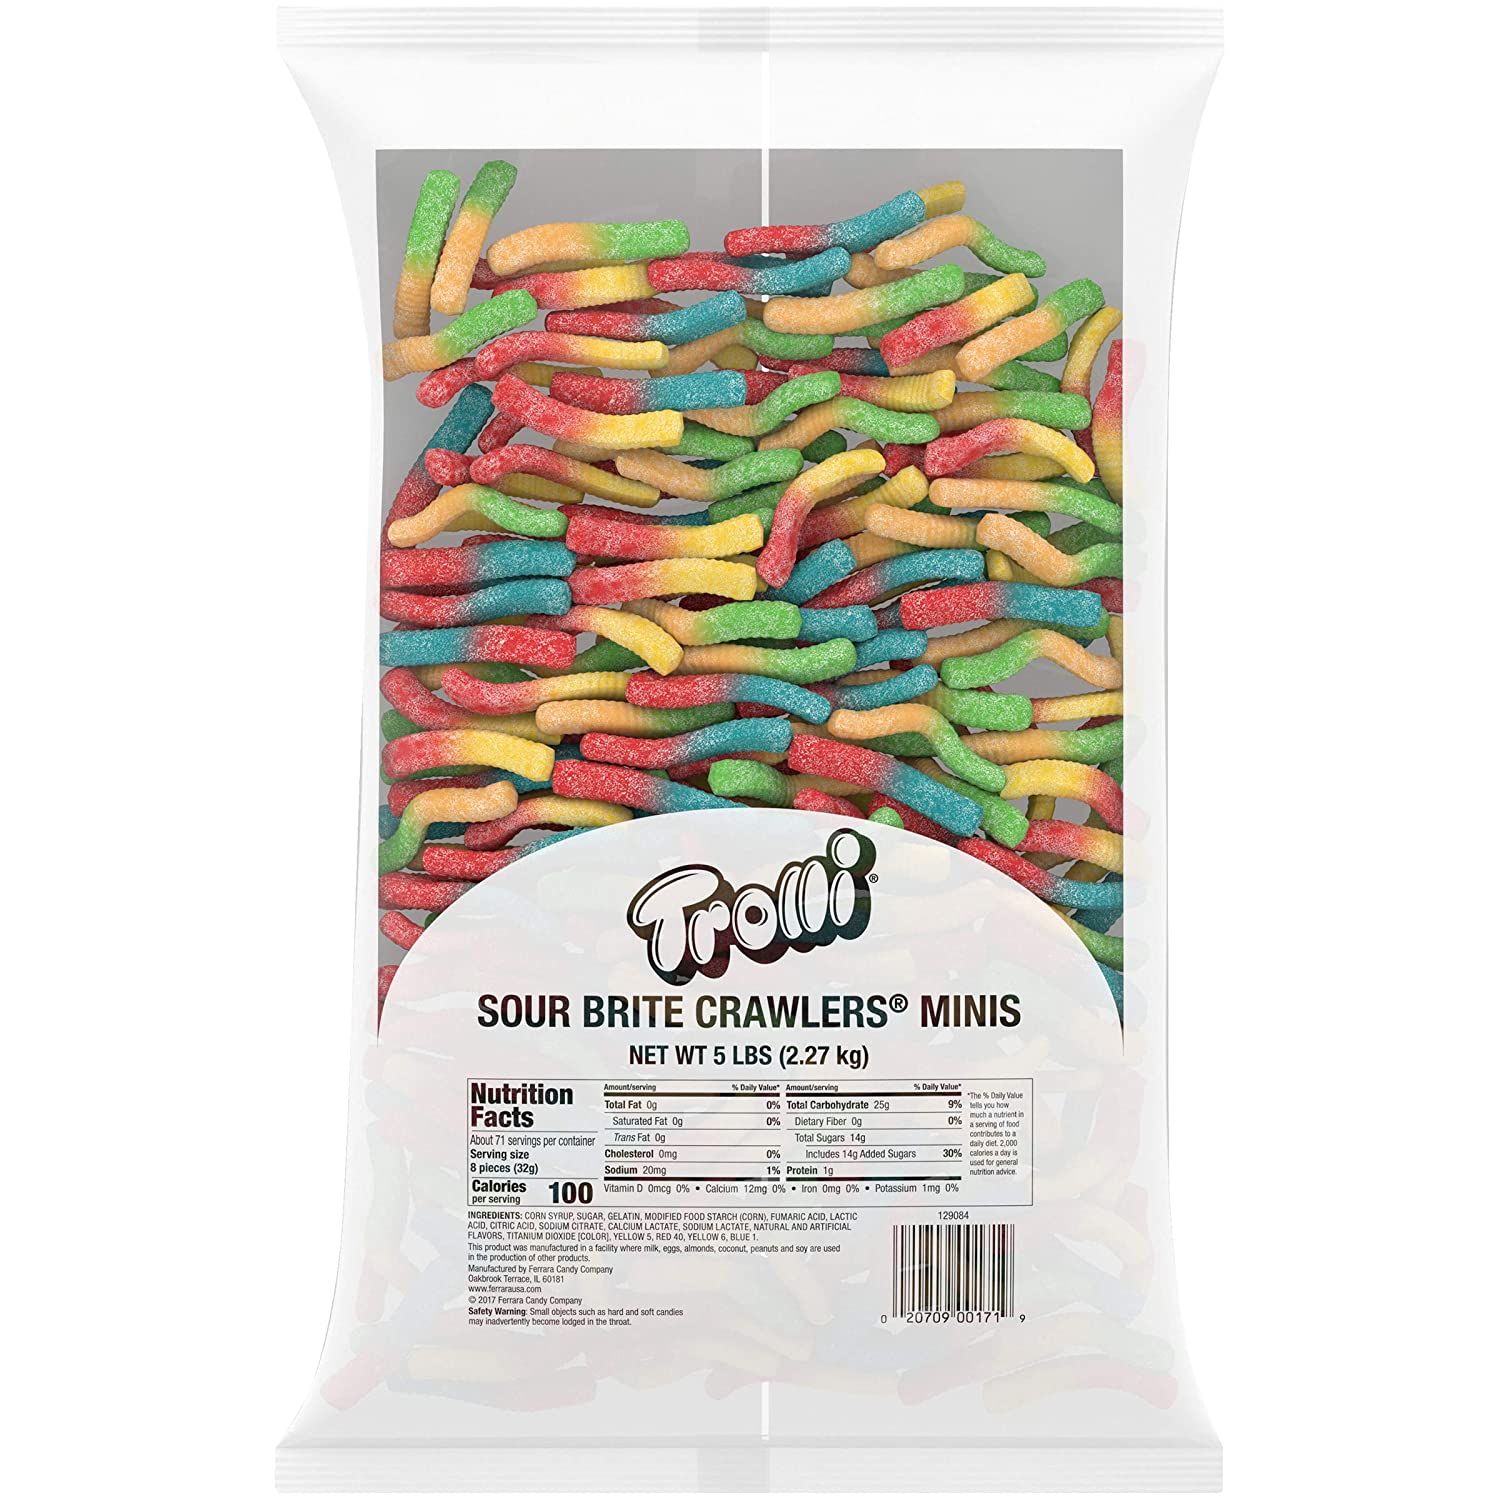 Trolli社 Sour Brite Crawlers Gummy Worms, 2.27kg Bulk Candy Bag Sour Gummy Worms